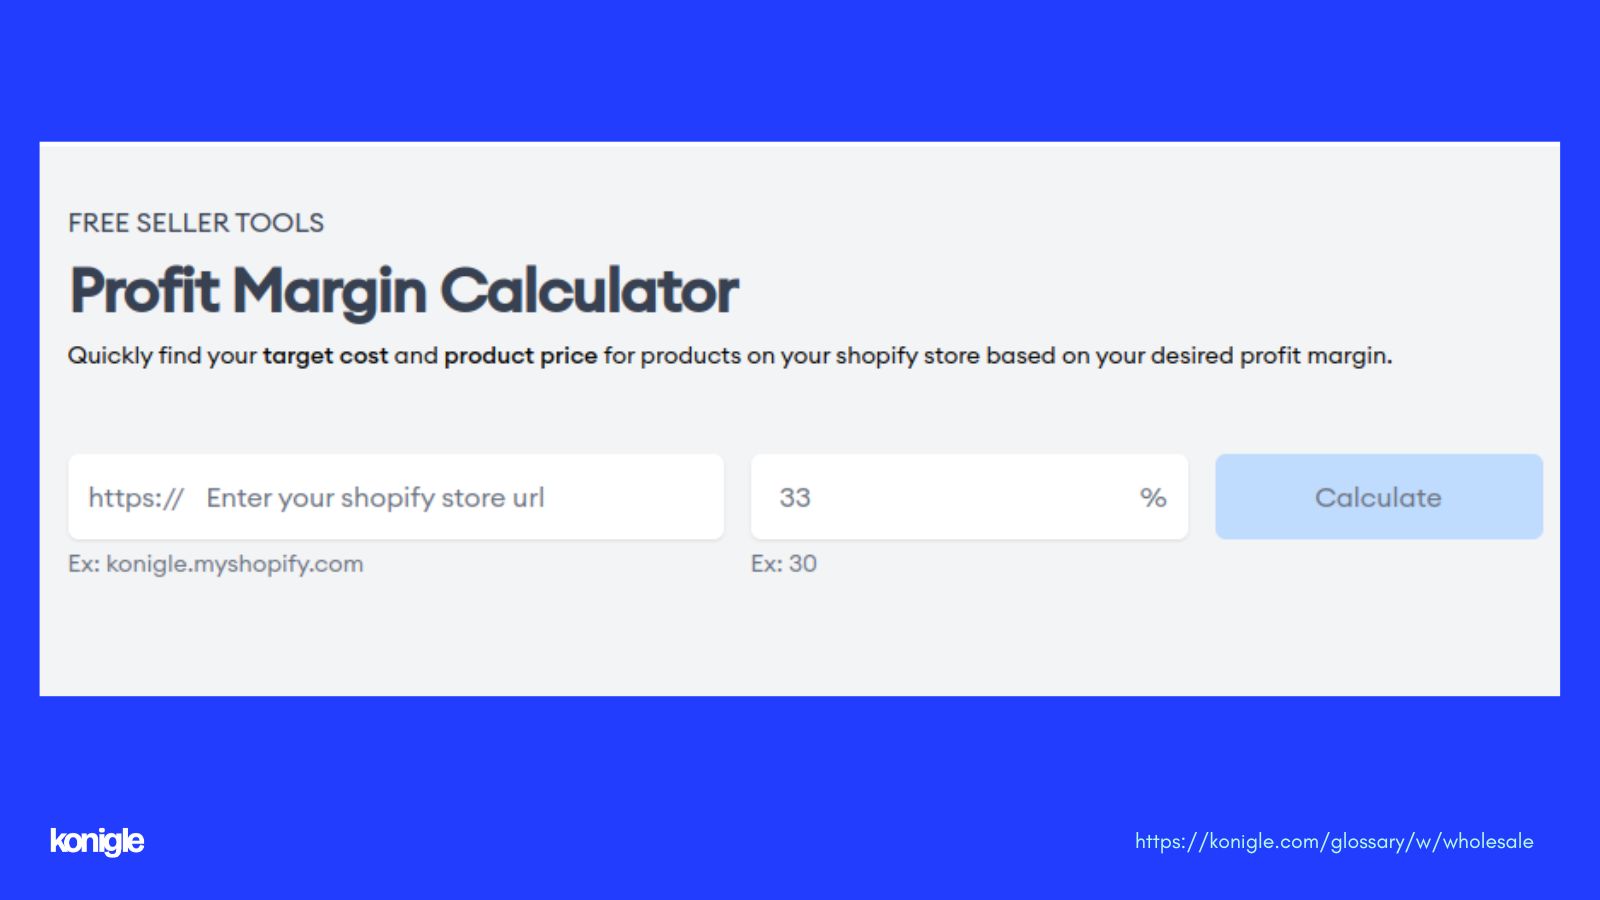 Konigle's profit margin calculator tool